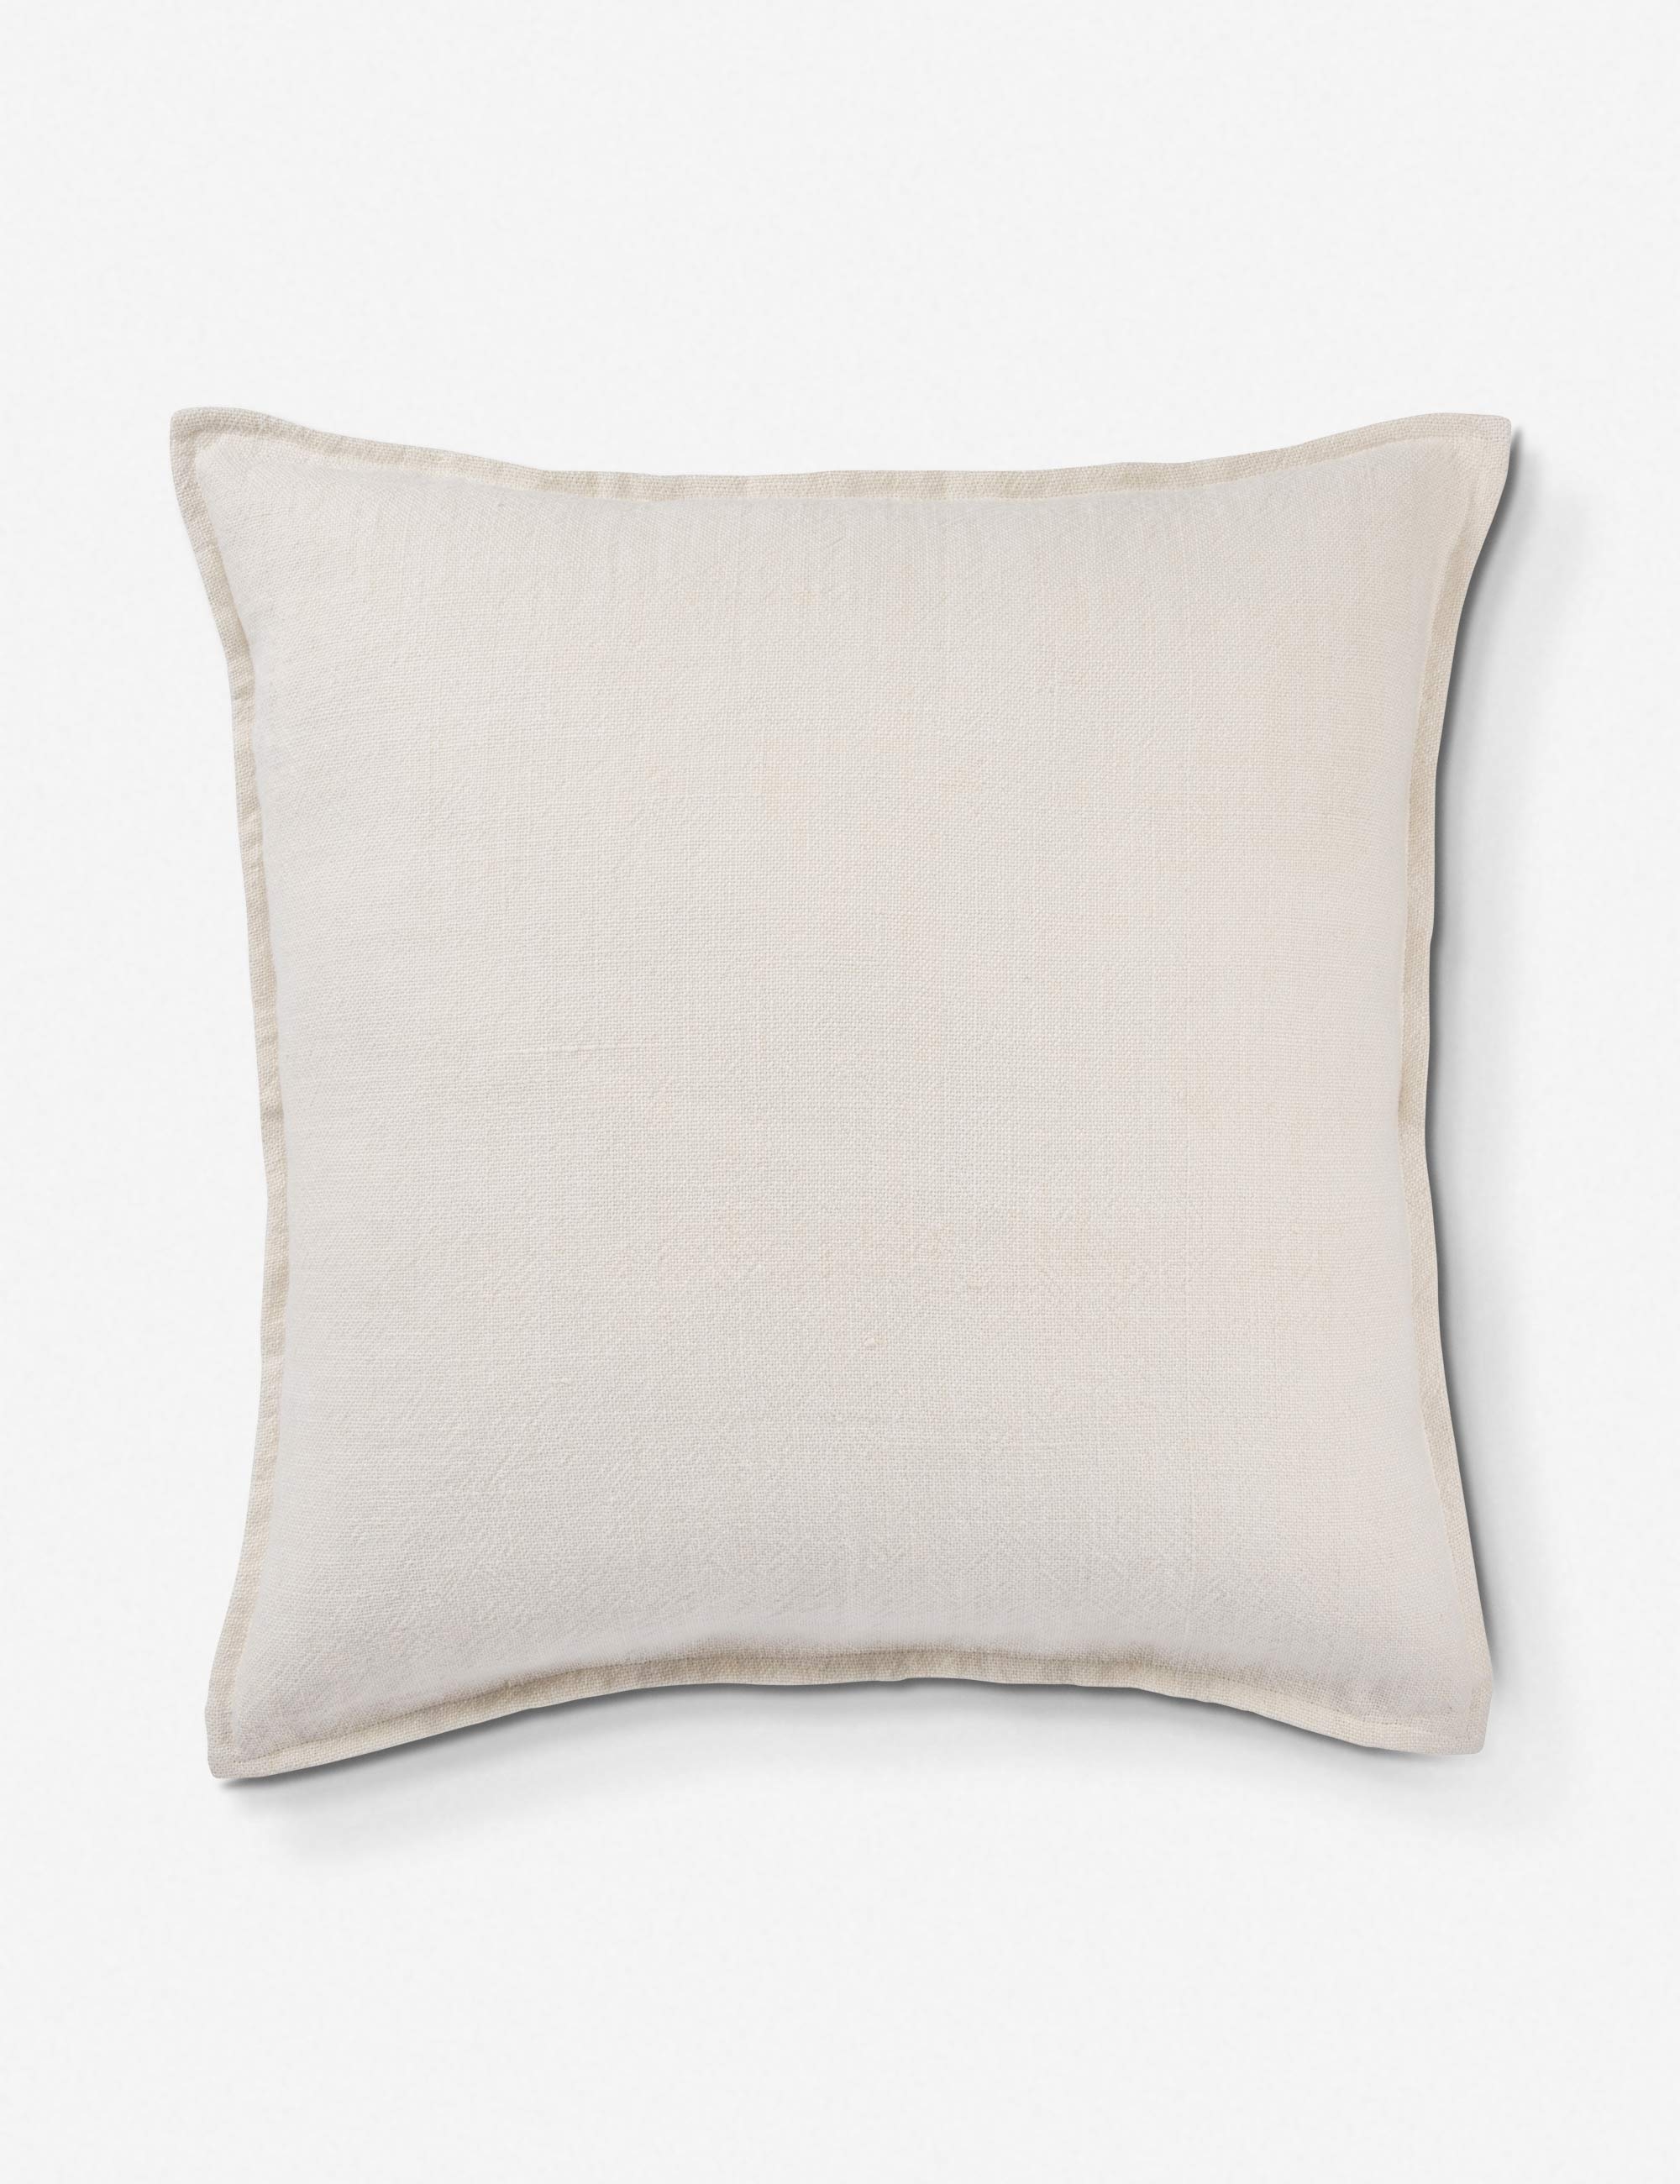 Emalita Linen Pillow - Image 0